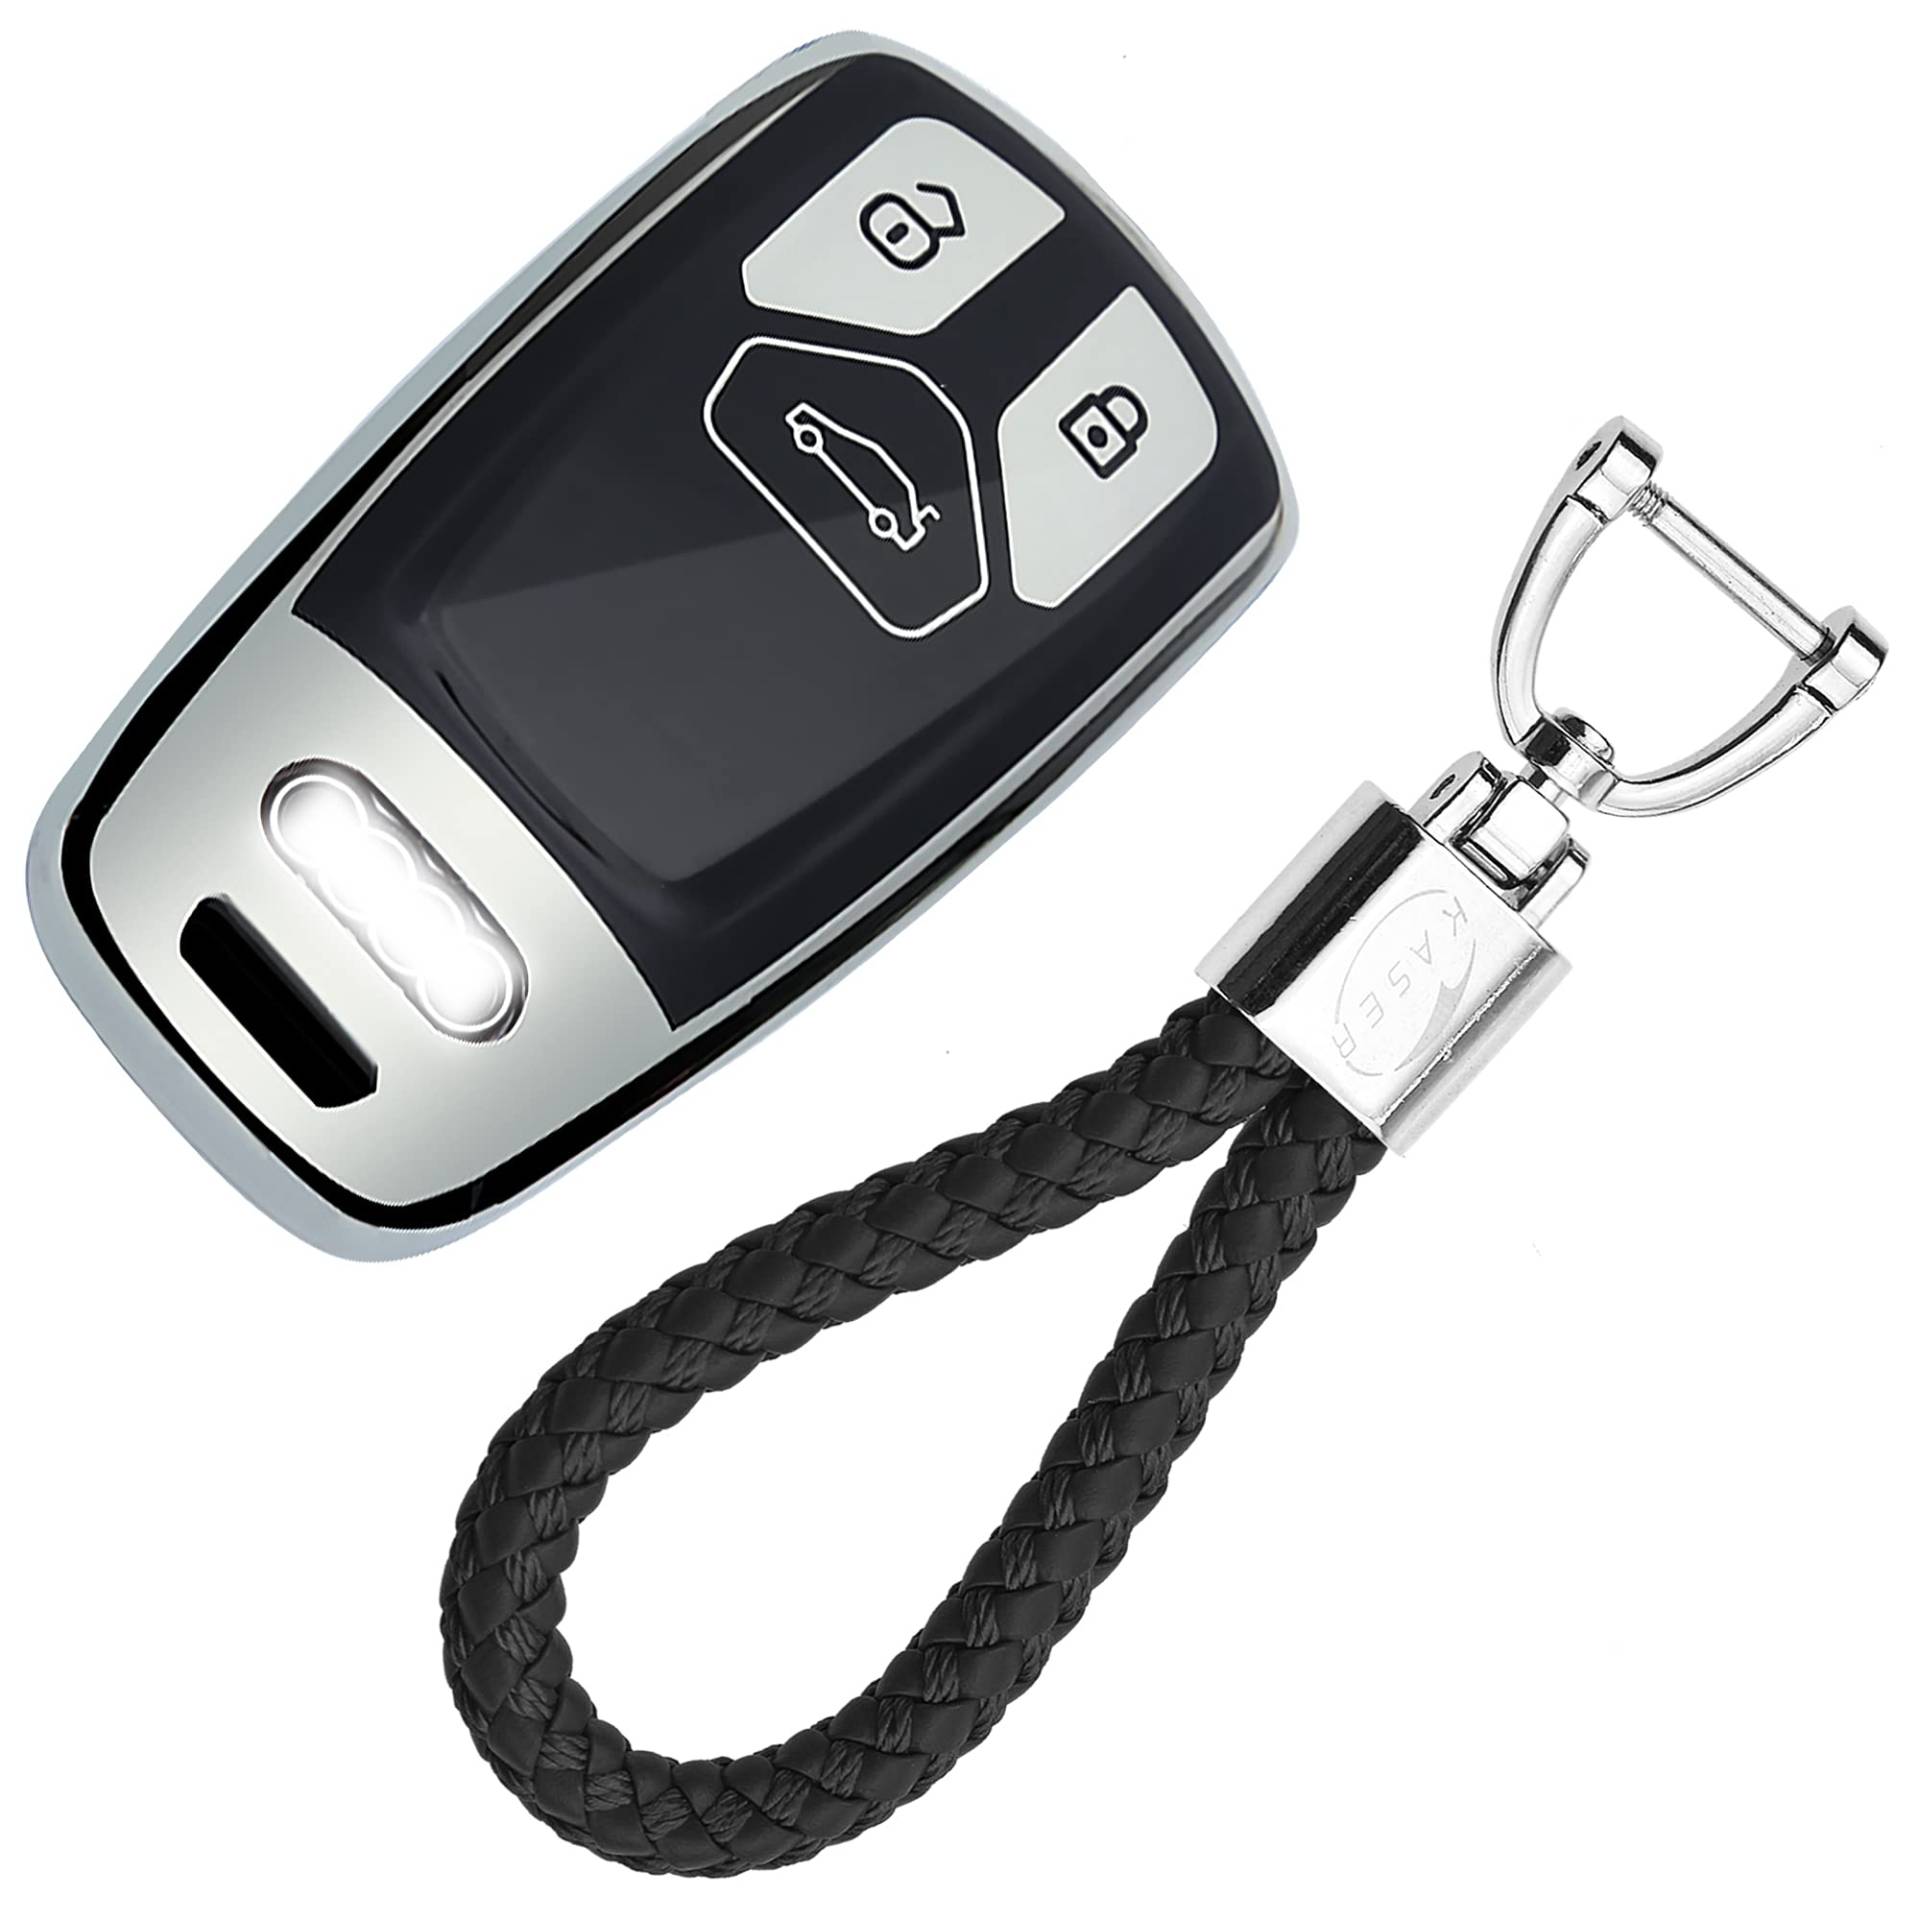 KASER Autoschlüssel Hülle kompatibel für Audi Cover TPU Silikon Hochglanz Schutzhülle Schlüsselhülle Fernbedienung Keyless A1 A2 A3 A4 A5 A7 Q1 Q3 Q5 TT Schlüsselbund (Silber) von Kaser